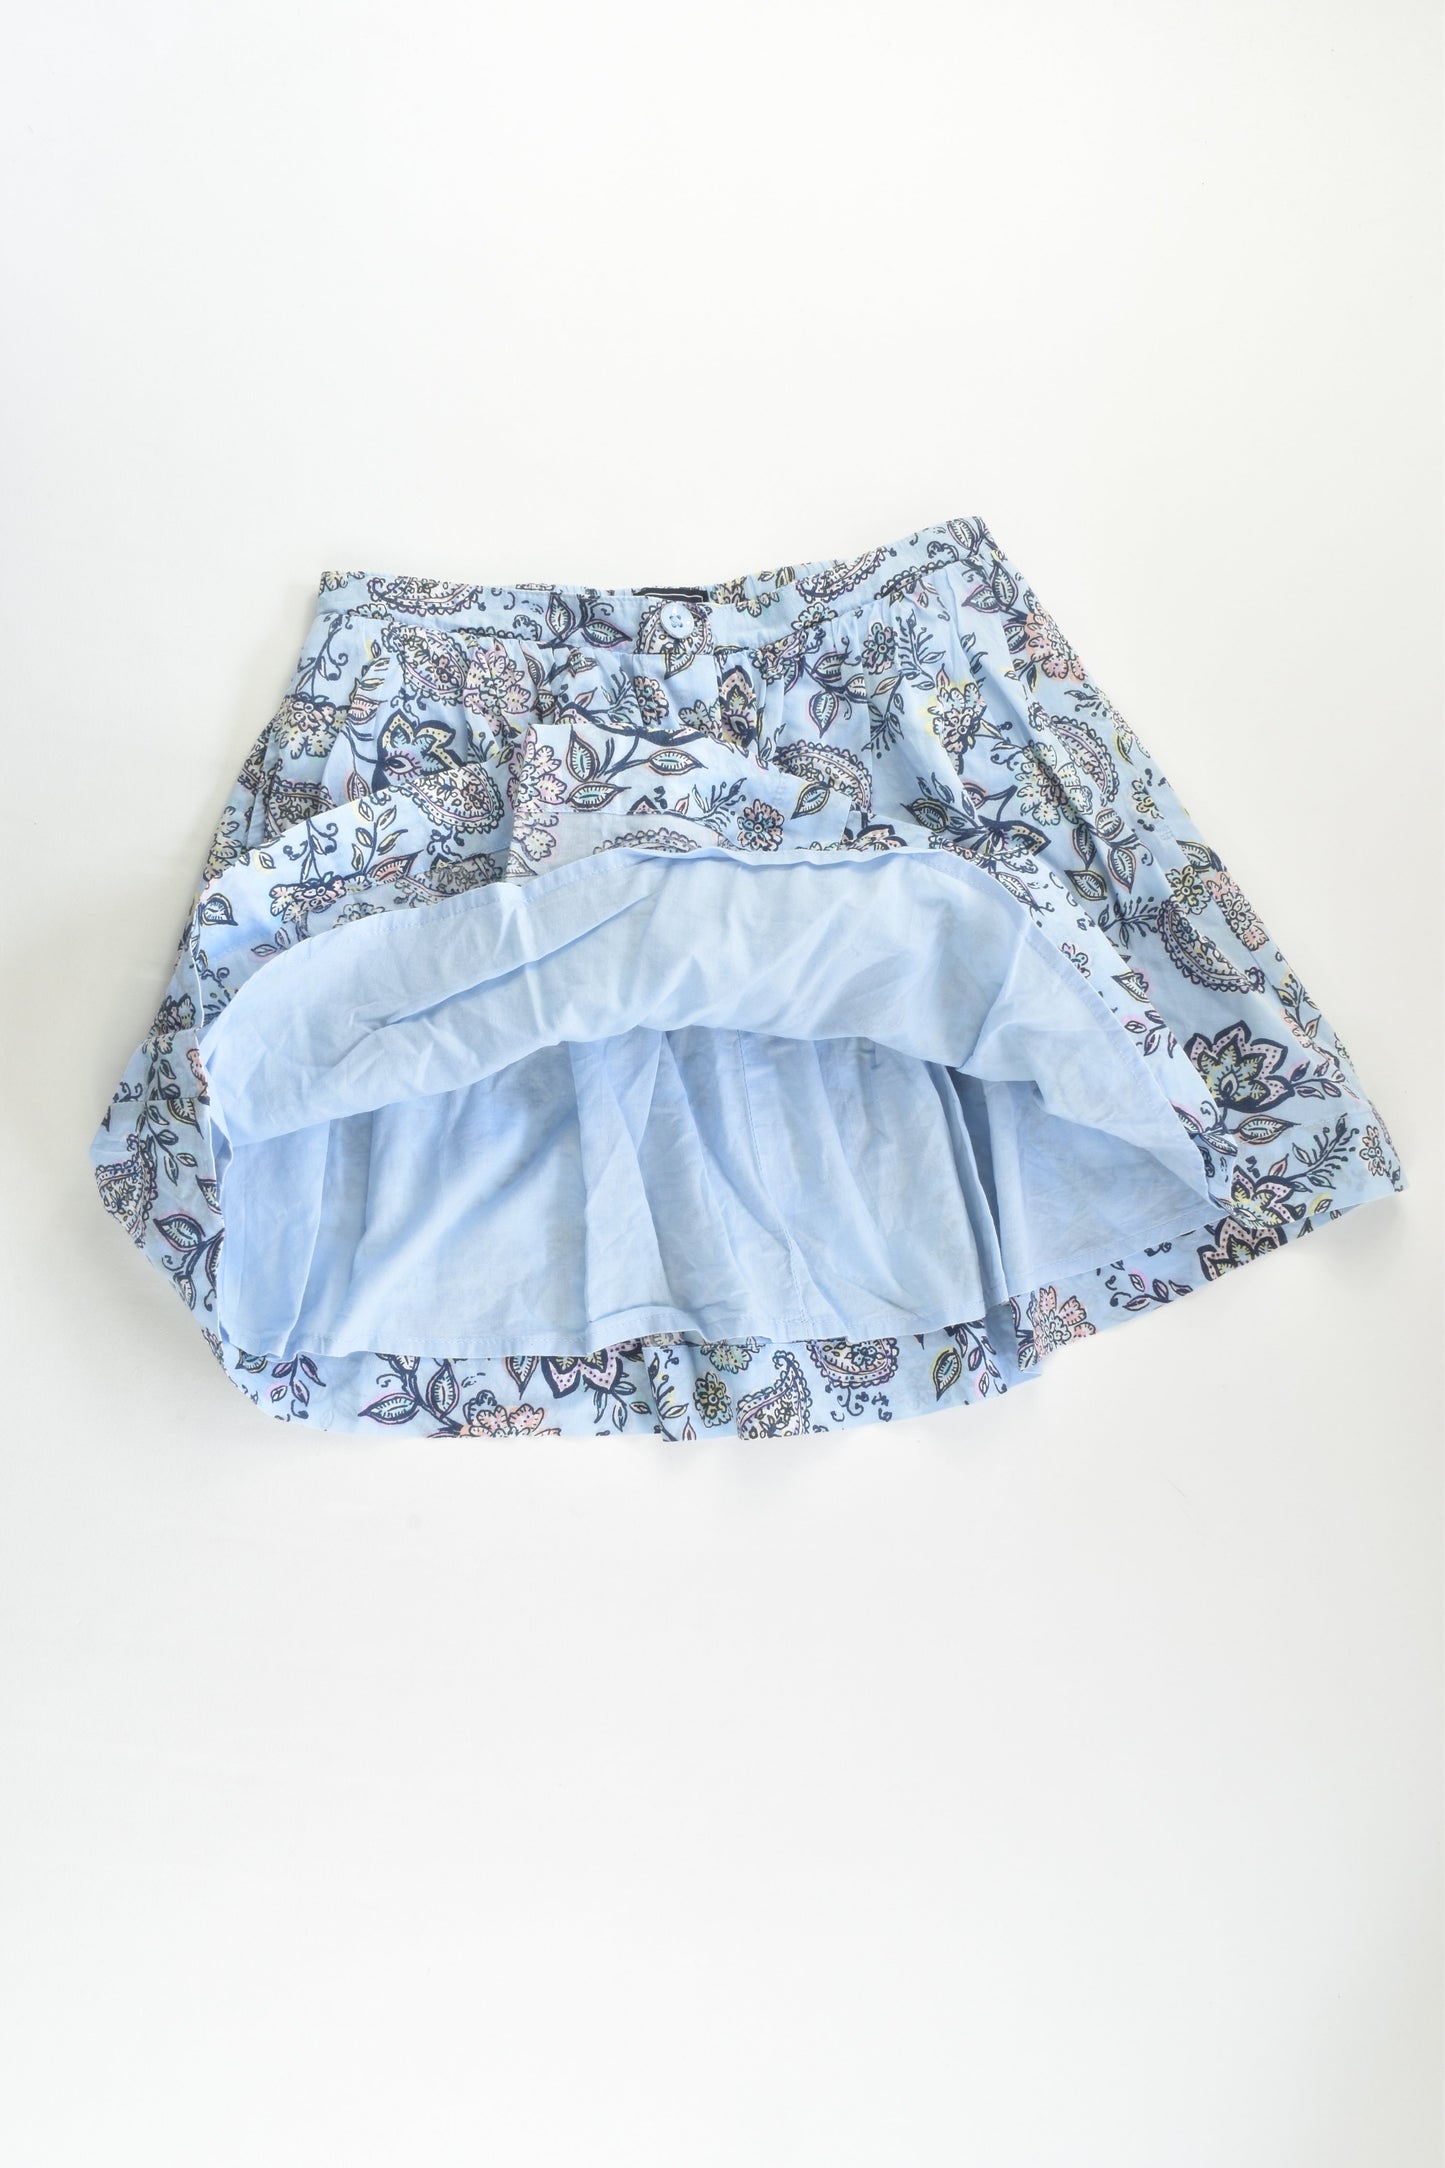 Gap Kids Size 8-9 Lined Skirt